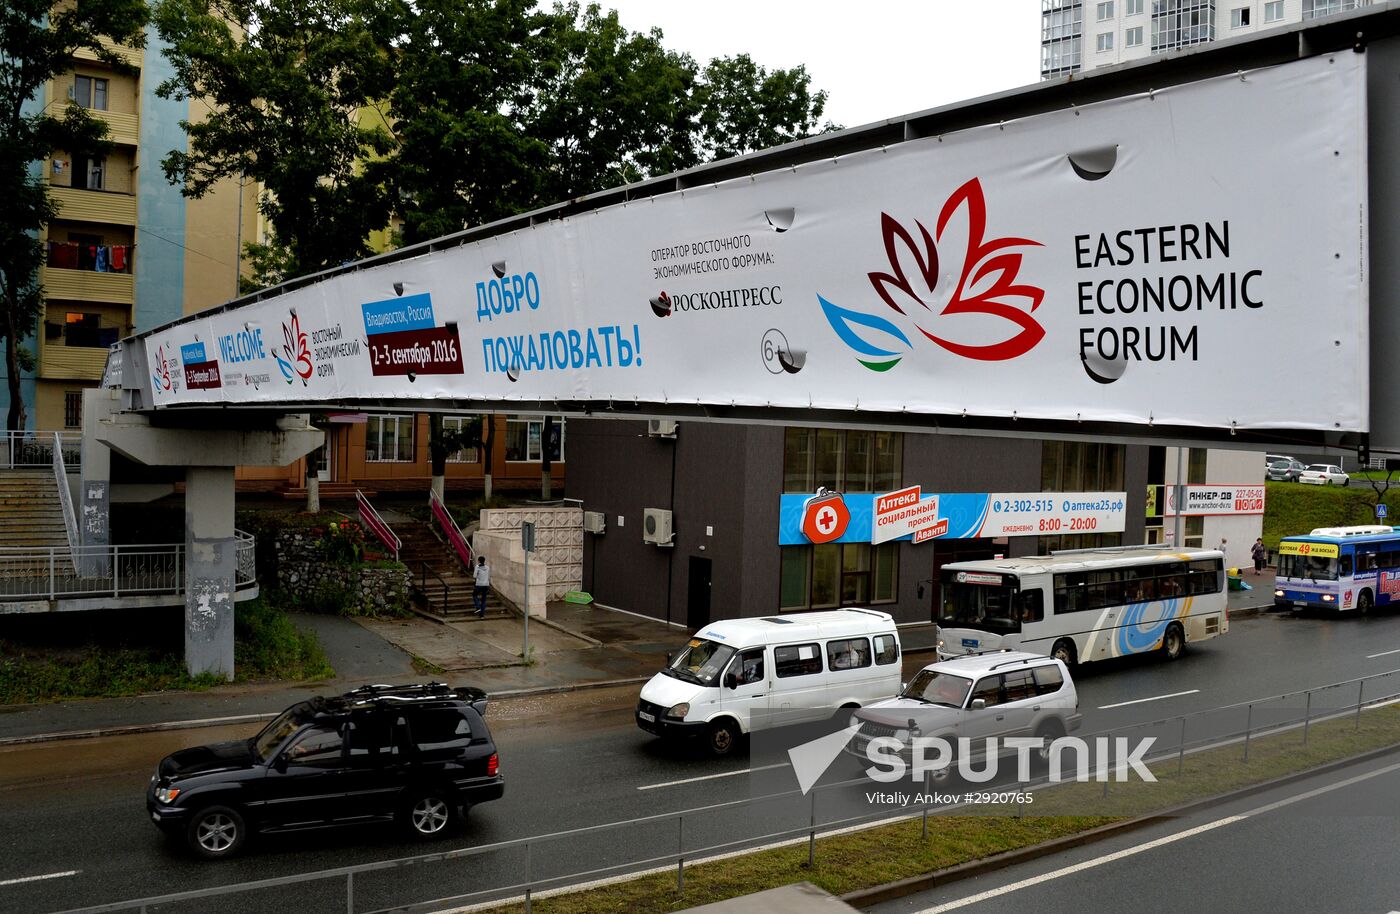 Preparations underway for Eastern Economic Forum in Vladivostok